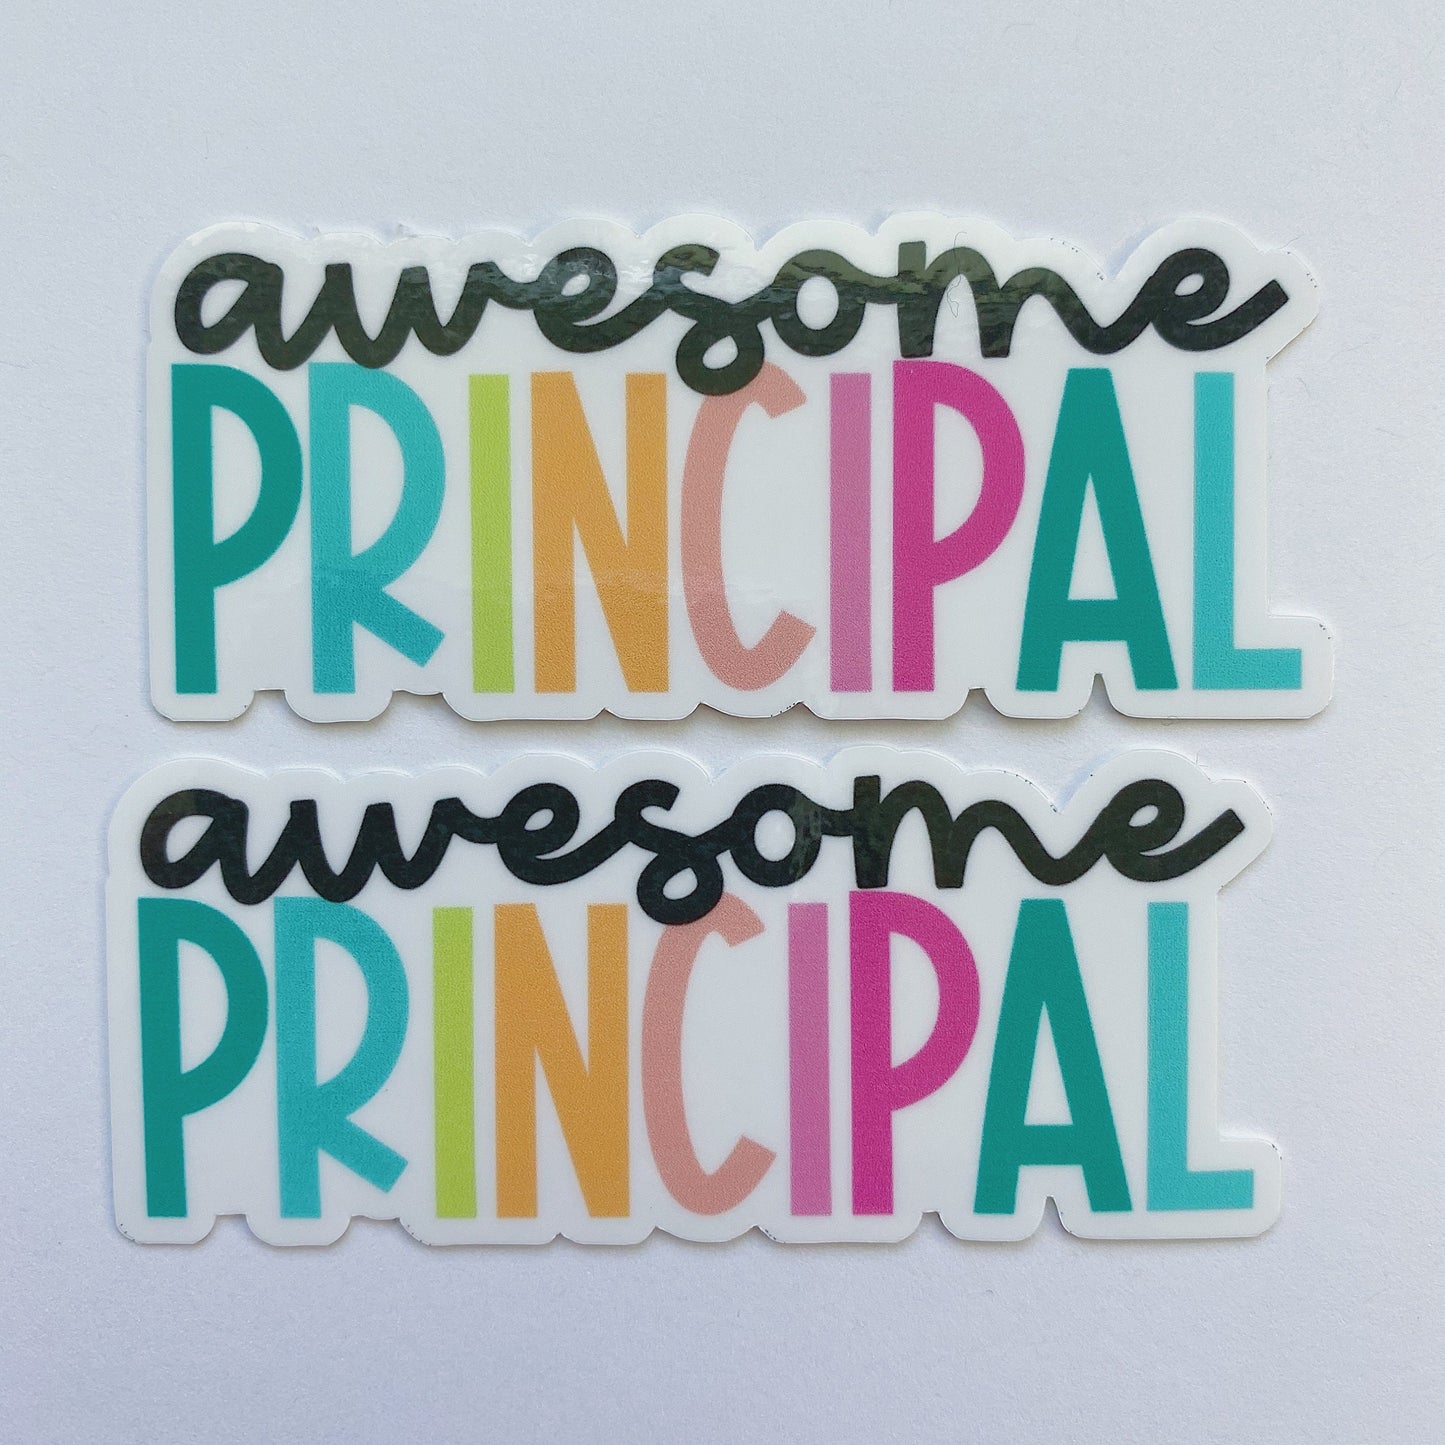 Awesome Principal Sticker